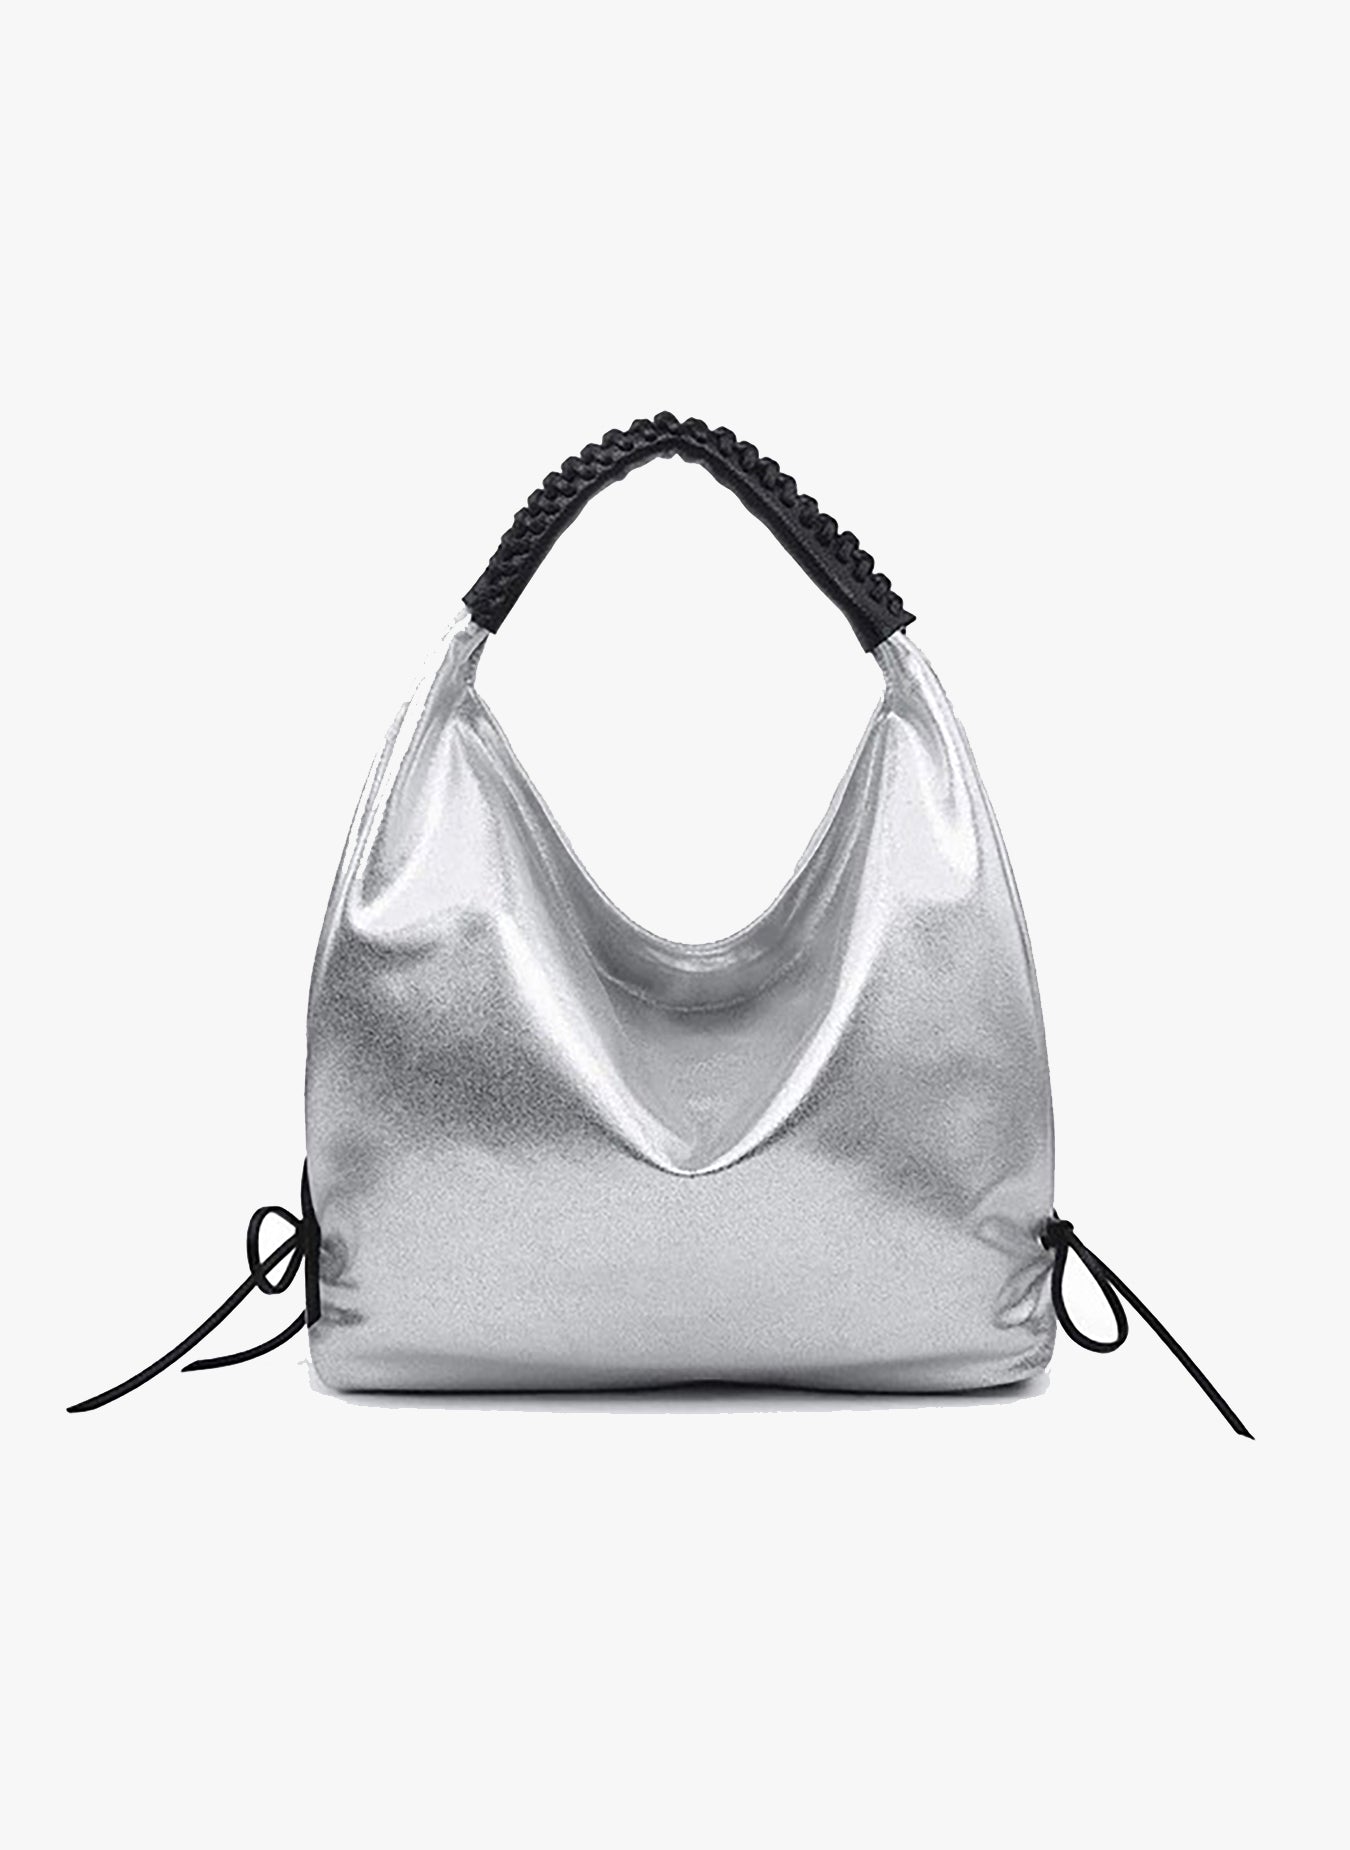 Hobo Metallic Bag - Silver